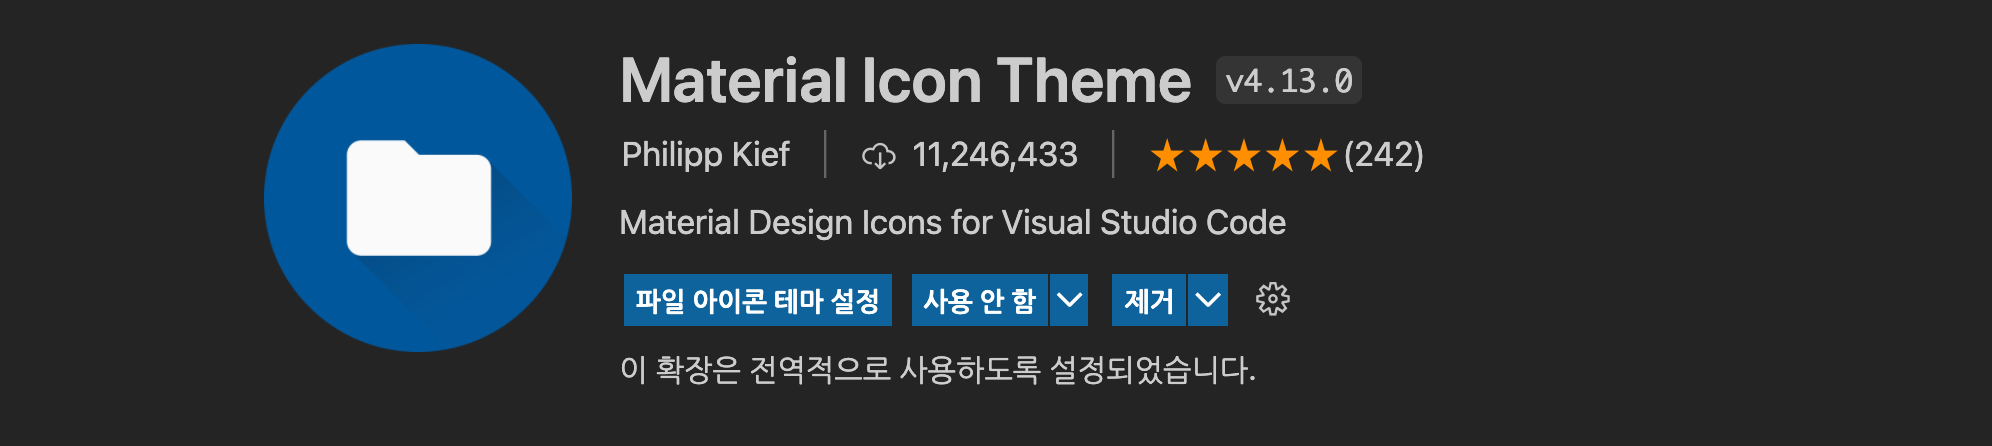 Material_Icon_Theme